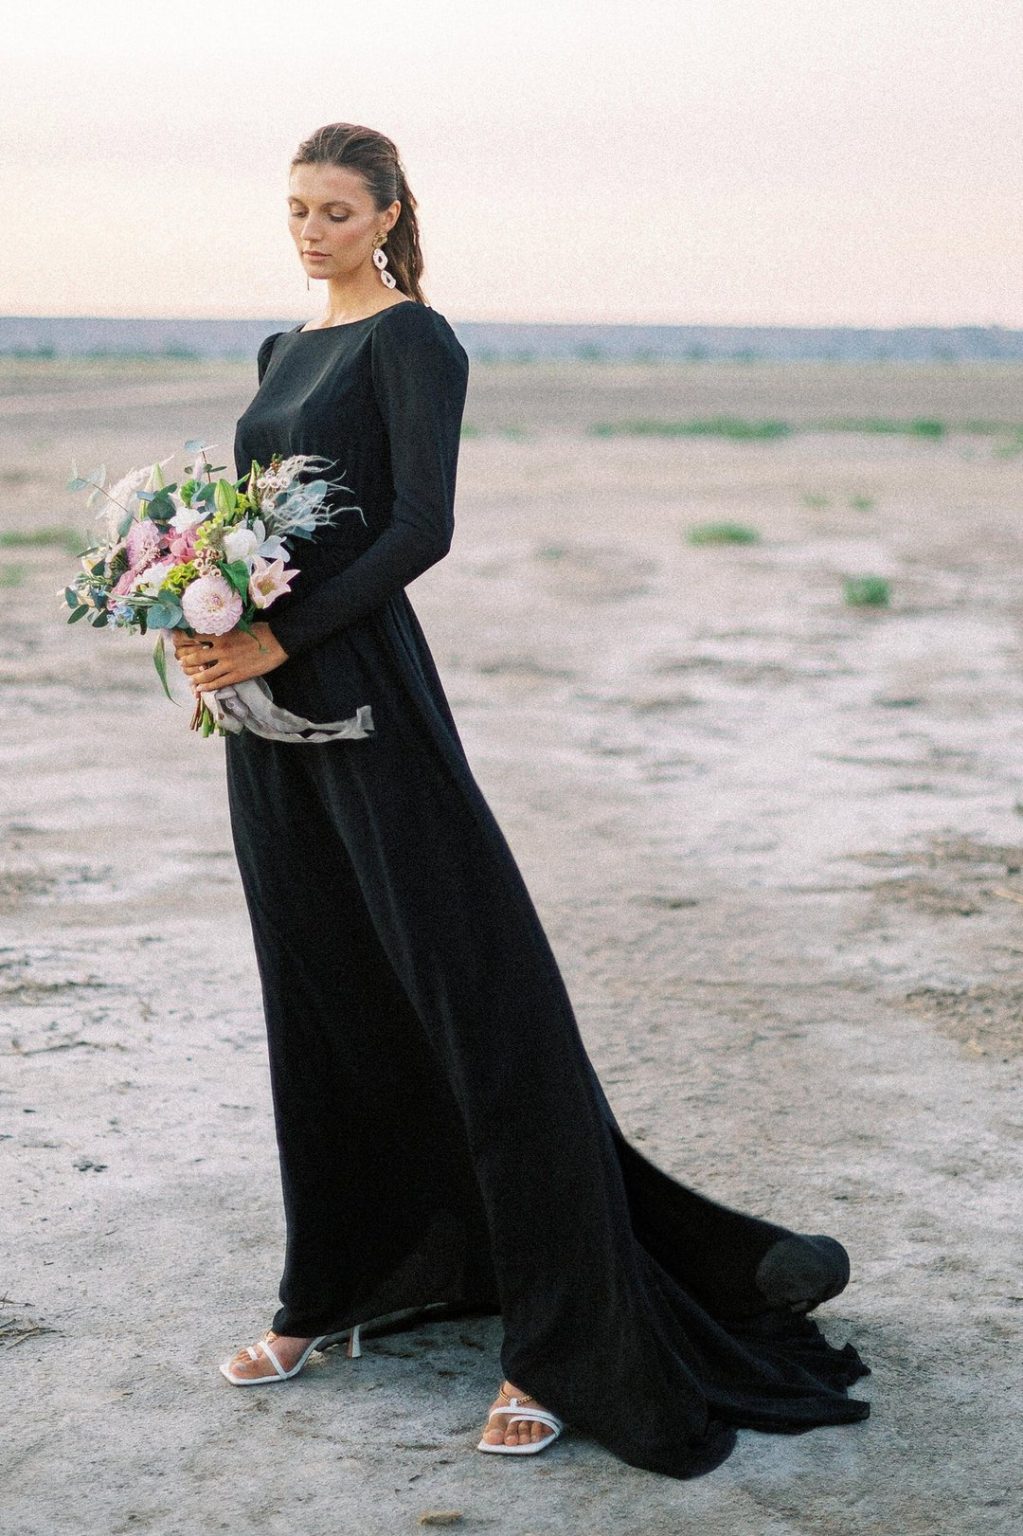 Black Modest Long Sleeve Wedding Dress With High Neck Bodice 1023x1536 